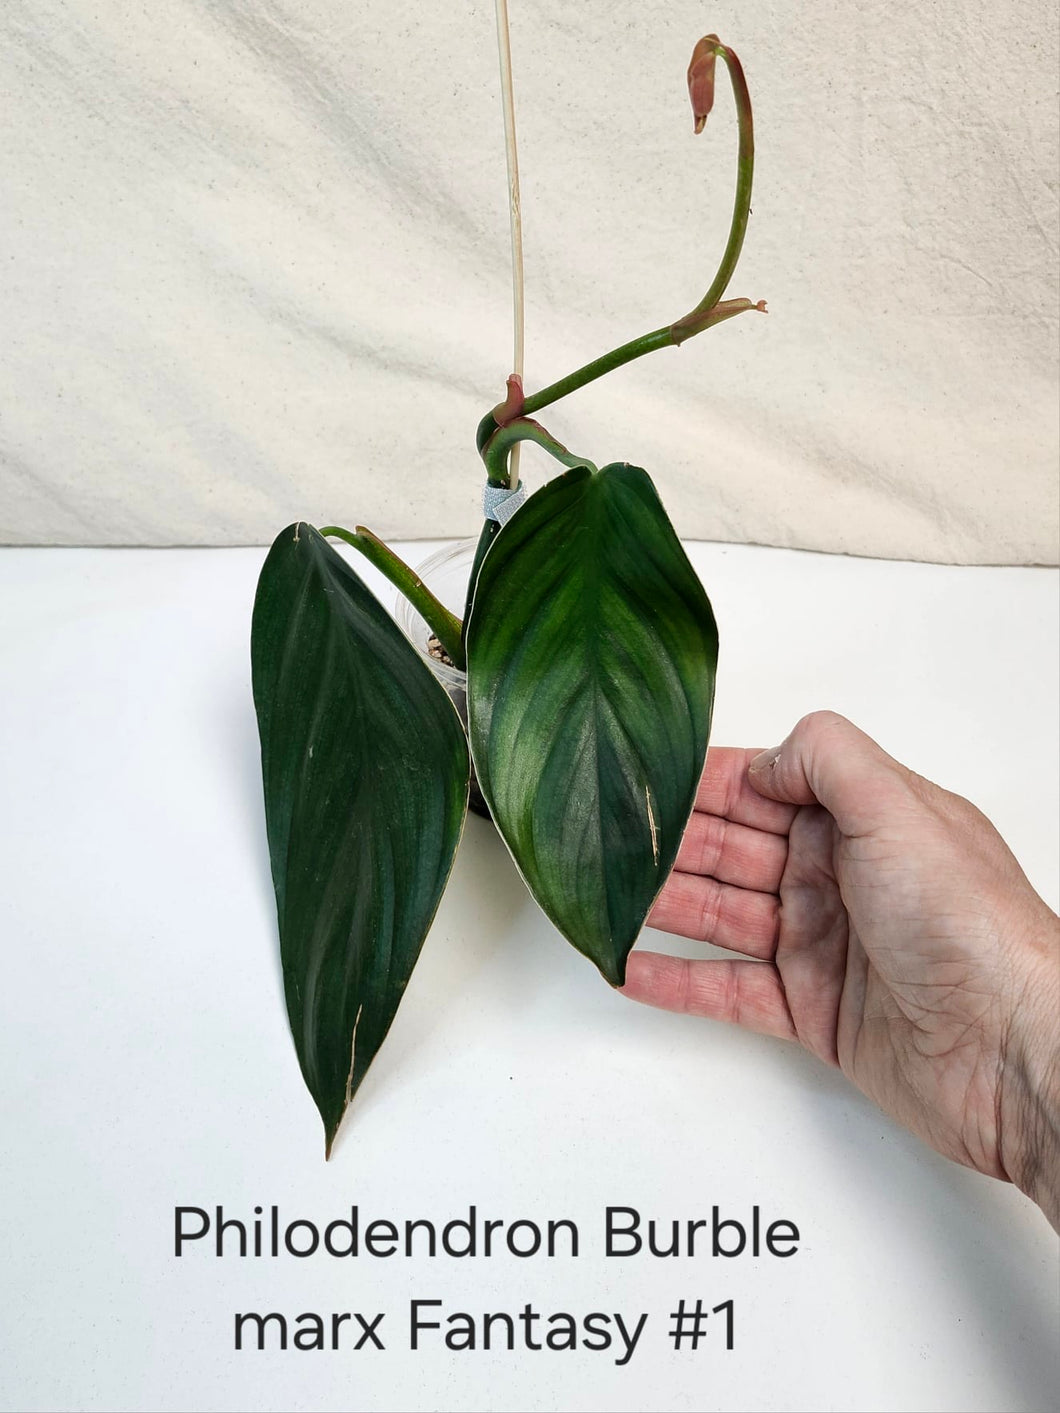 Philodendron burle marx fantasy #1